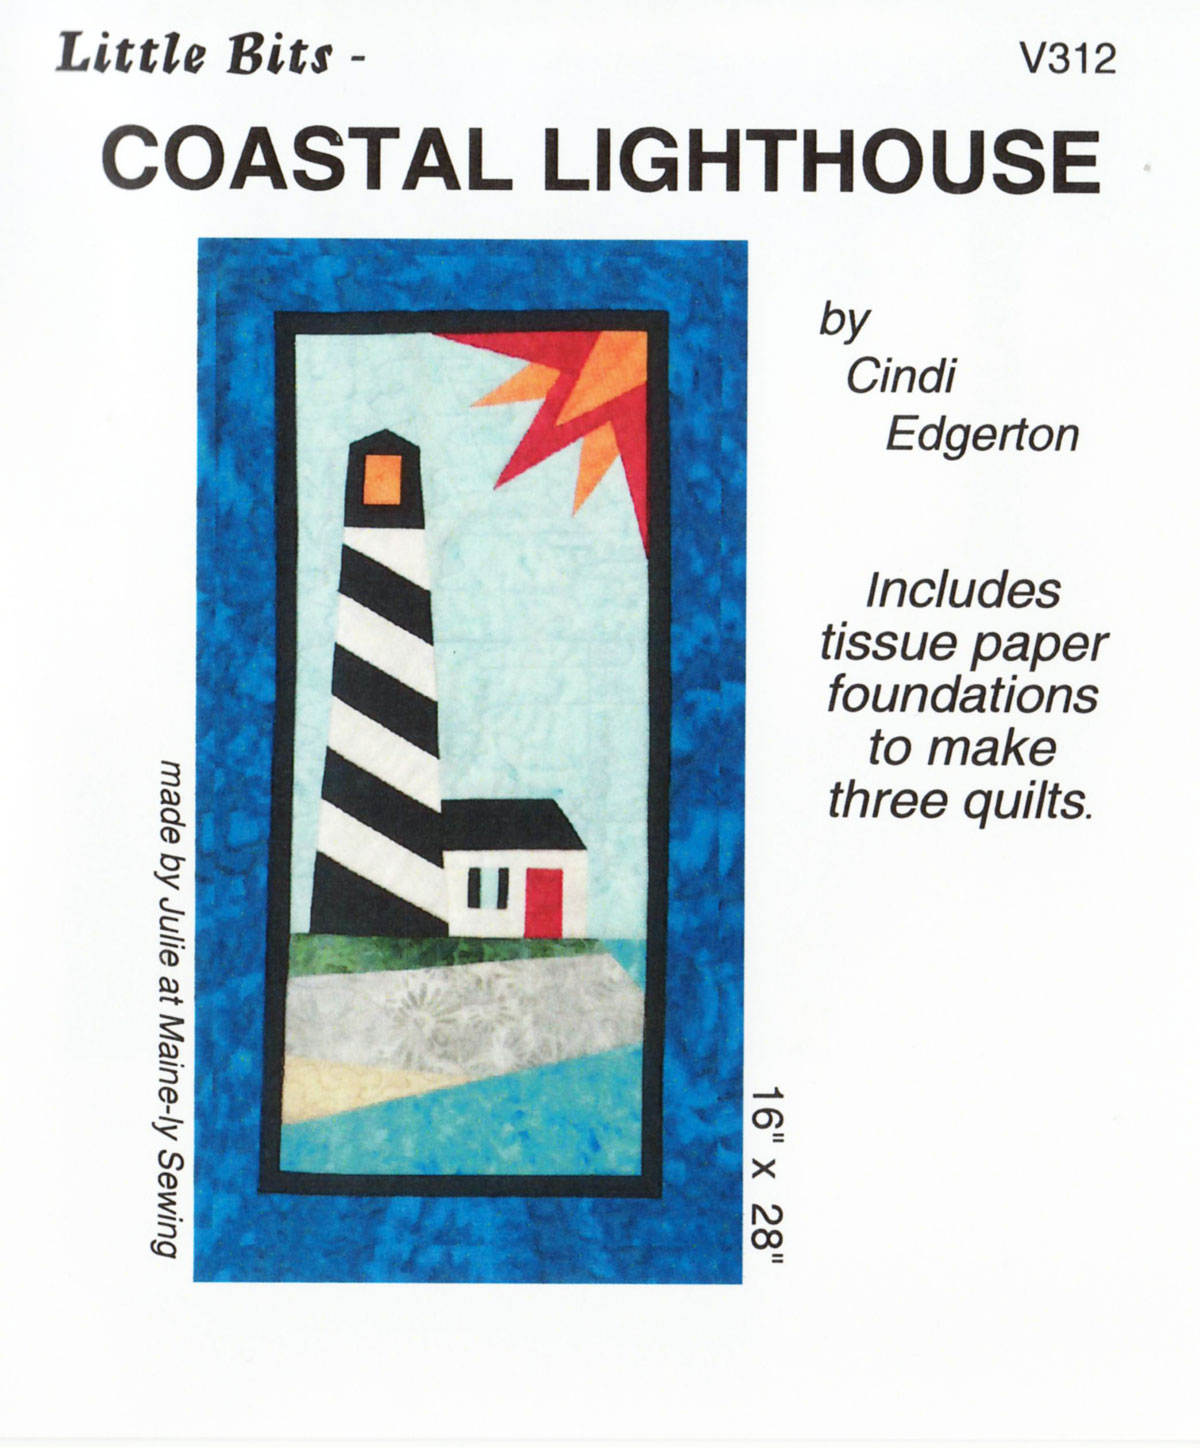 Little-Bits-Coastal-Lighthouse-quilt-sewing-pattern-Cindi-Edgerton-front